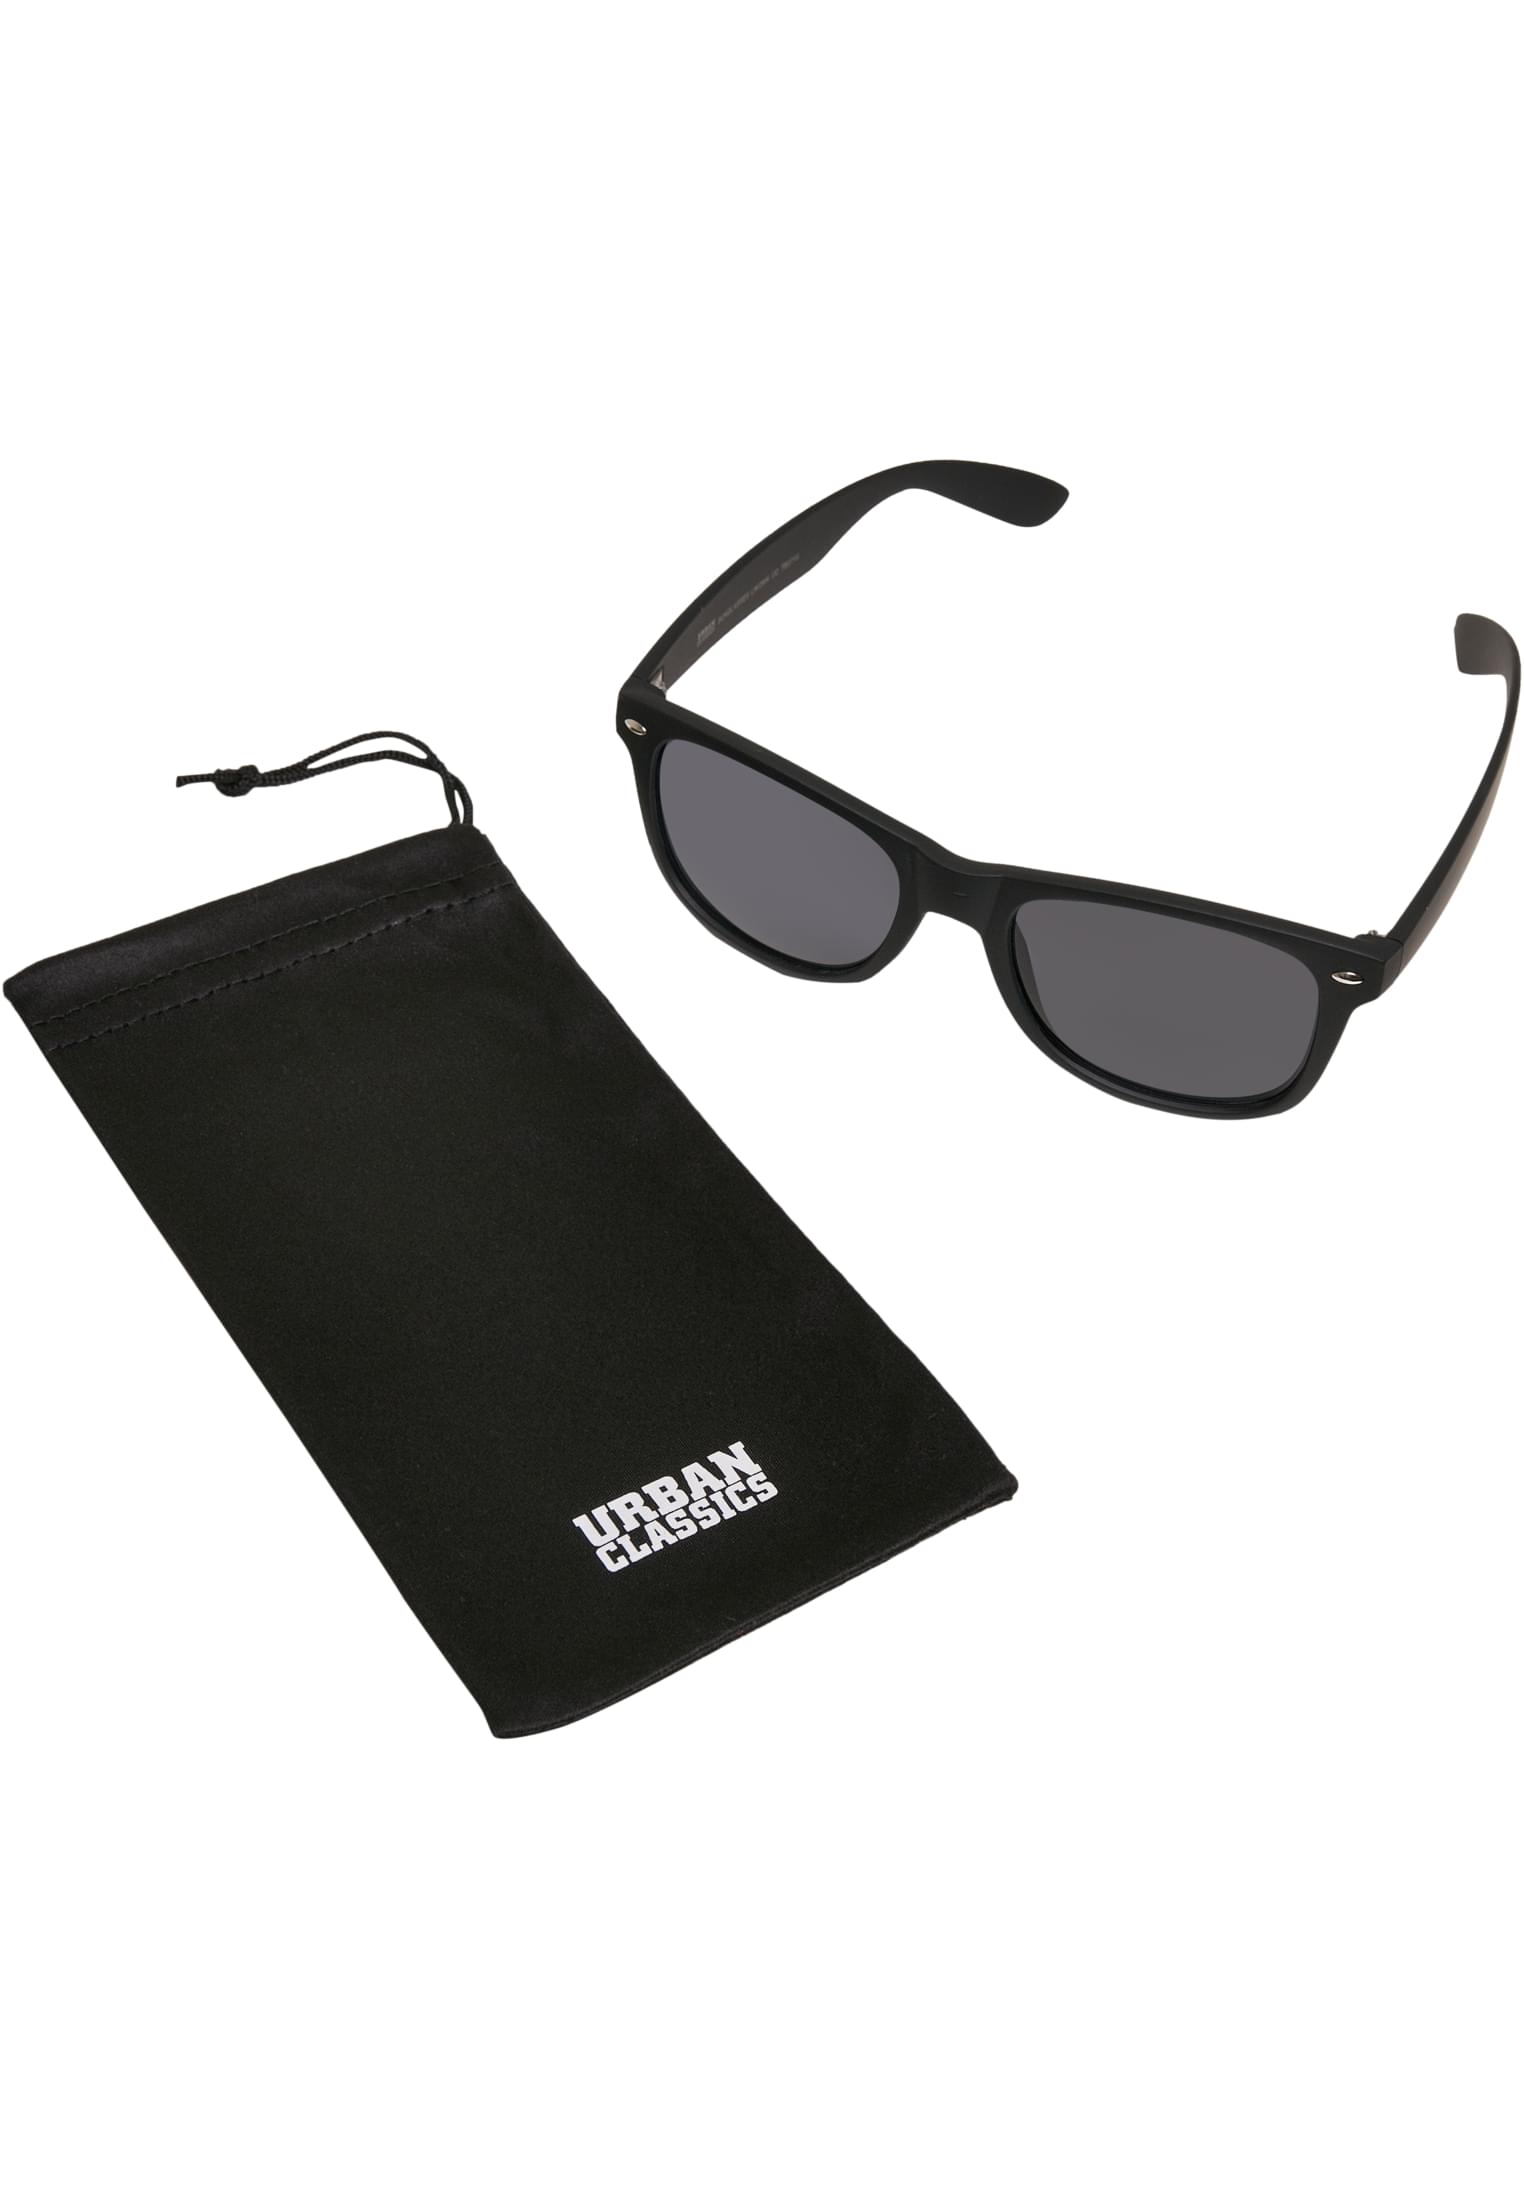 Likoma UC sunglasses black